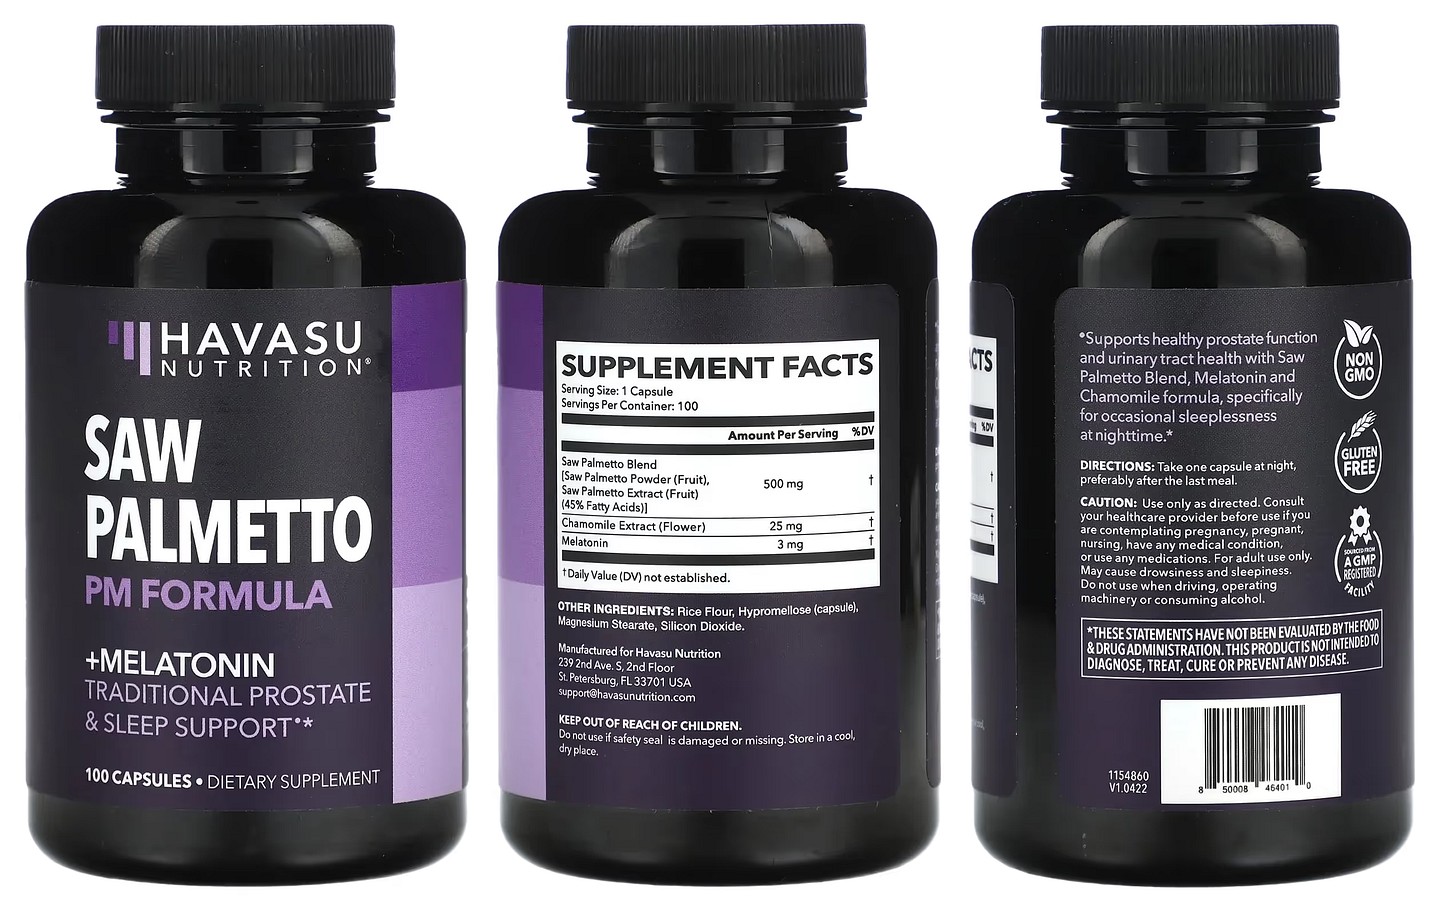 Havasu Nutrition, Saw Palmetto PM Formula packaging